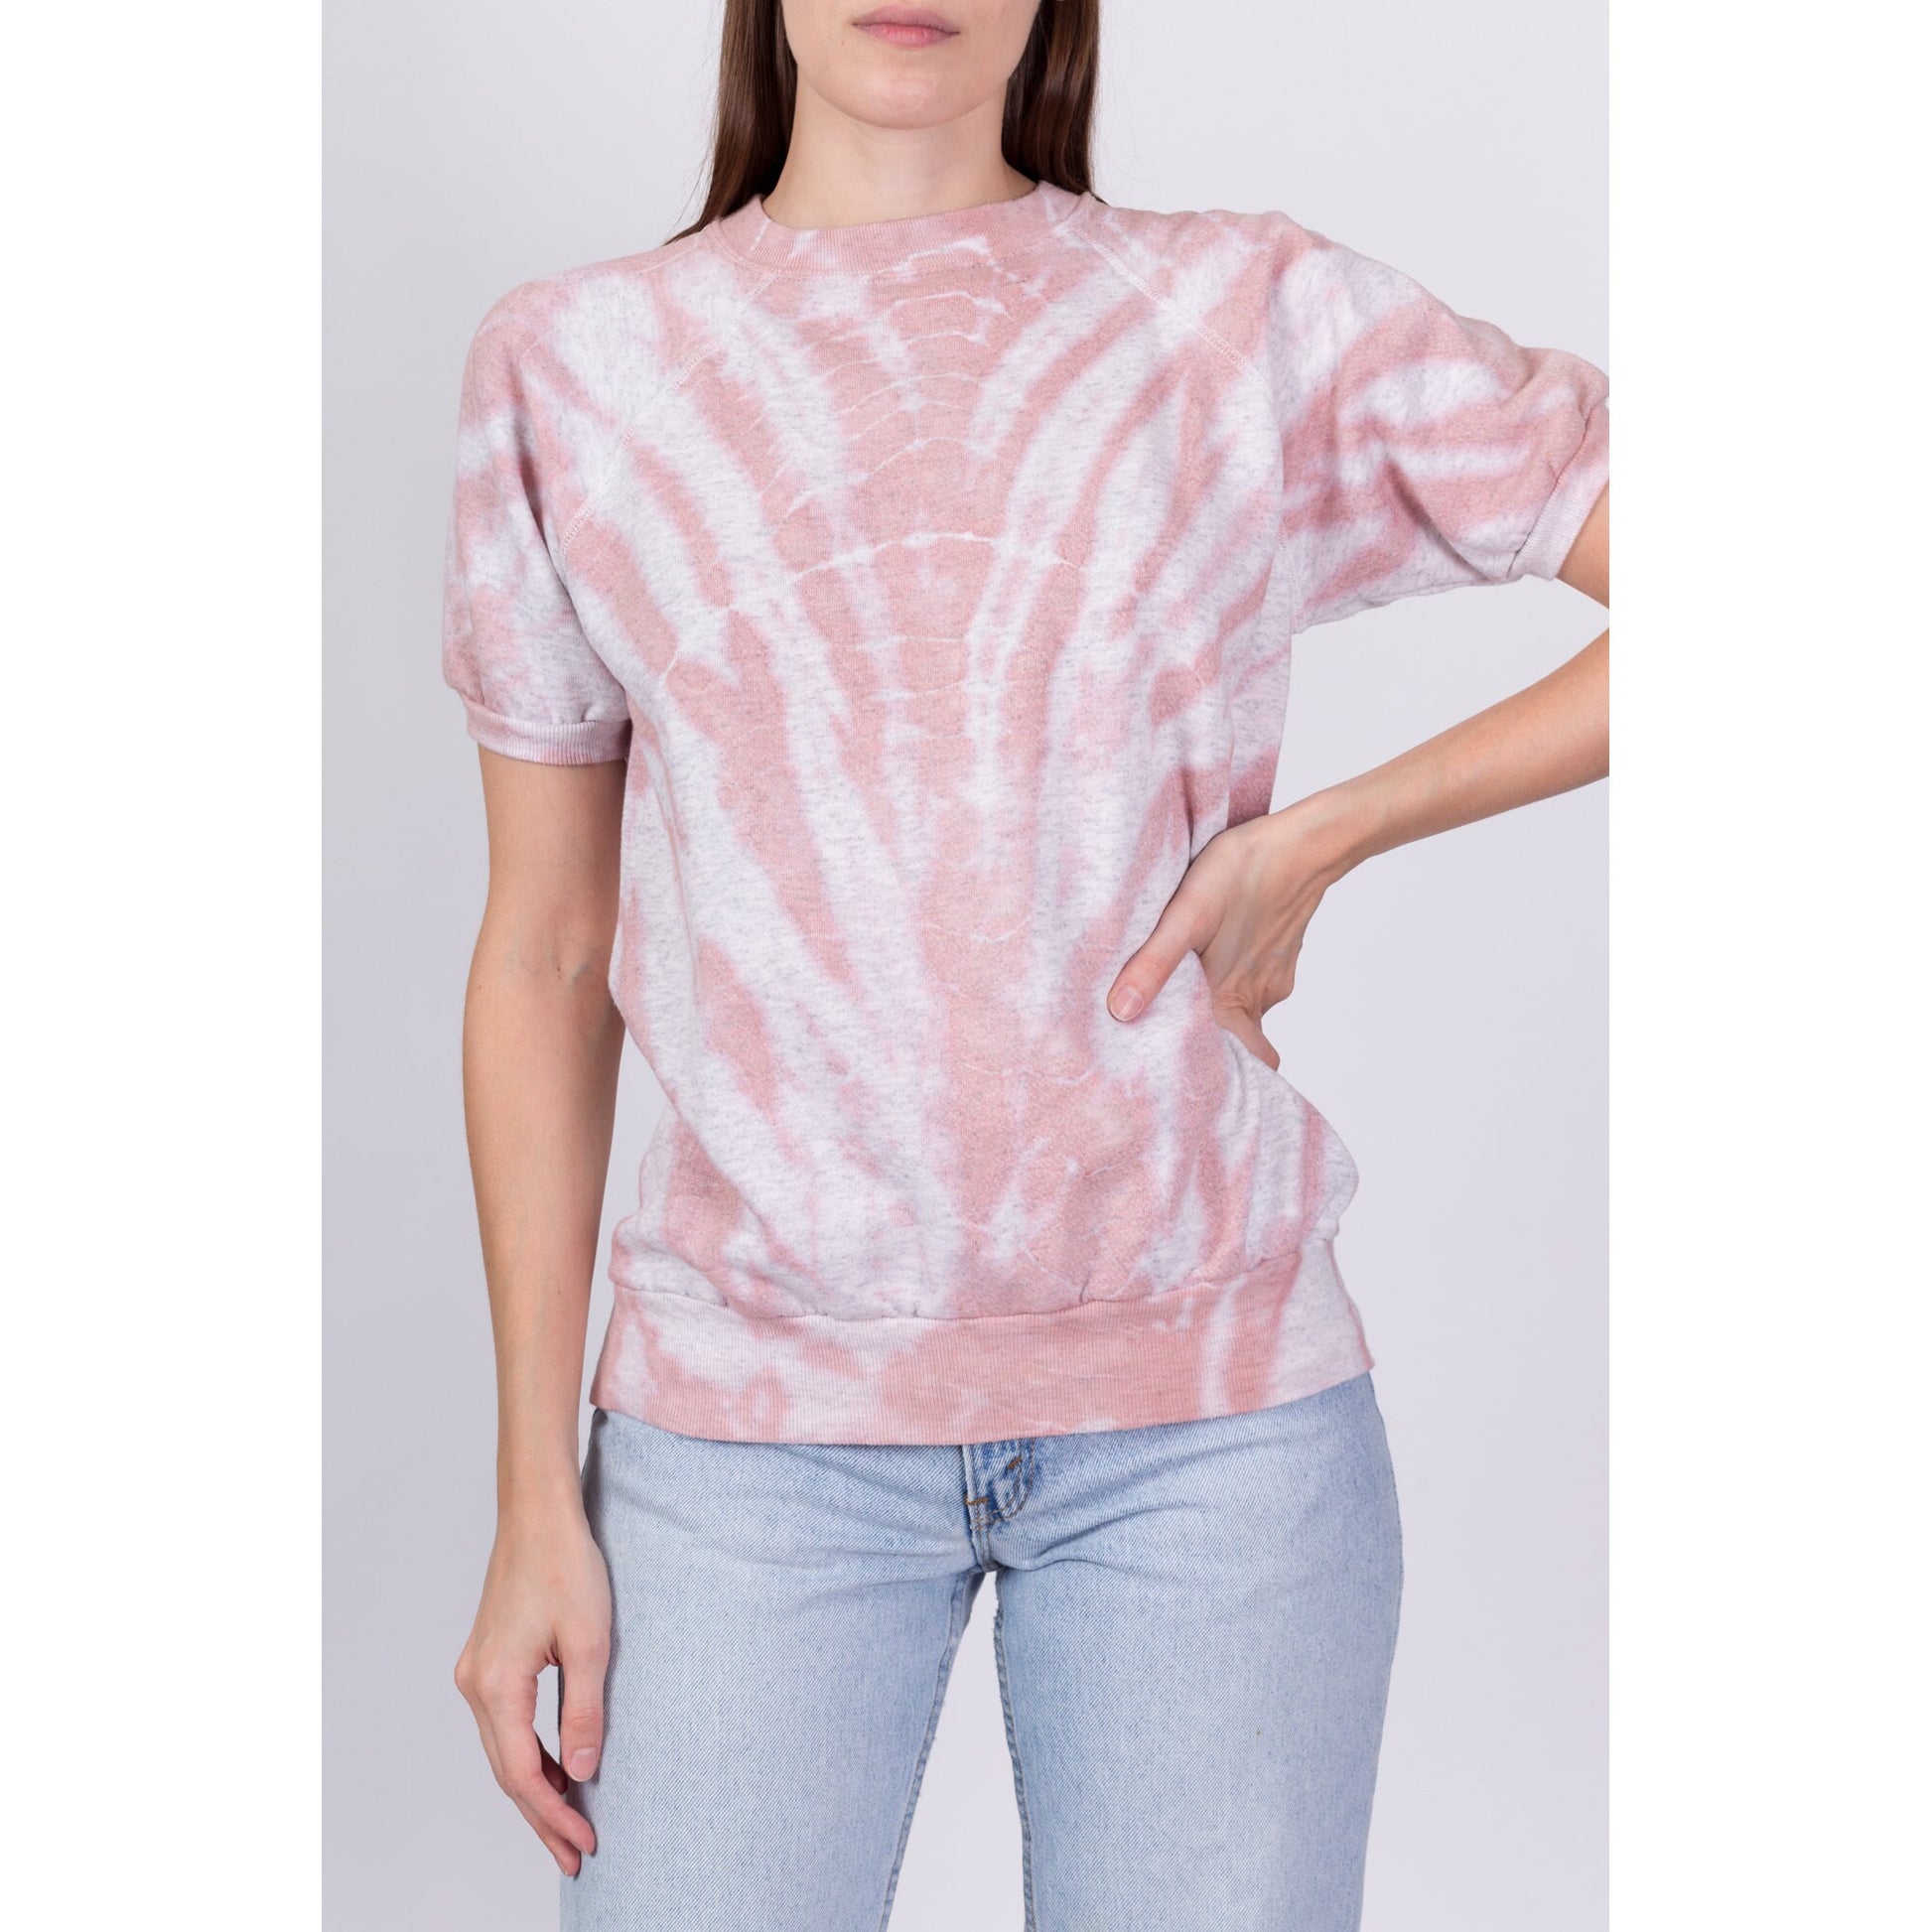 90s Pink Tie Dye Sweatshirt Top - Small to Medium 